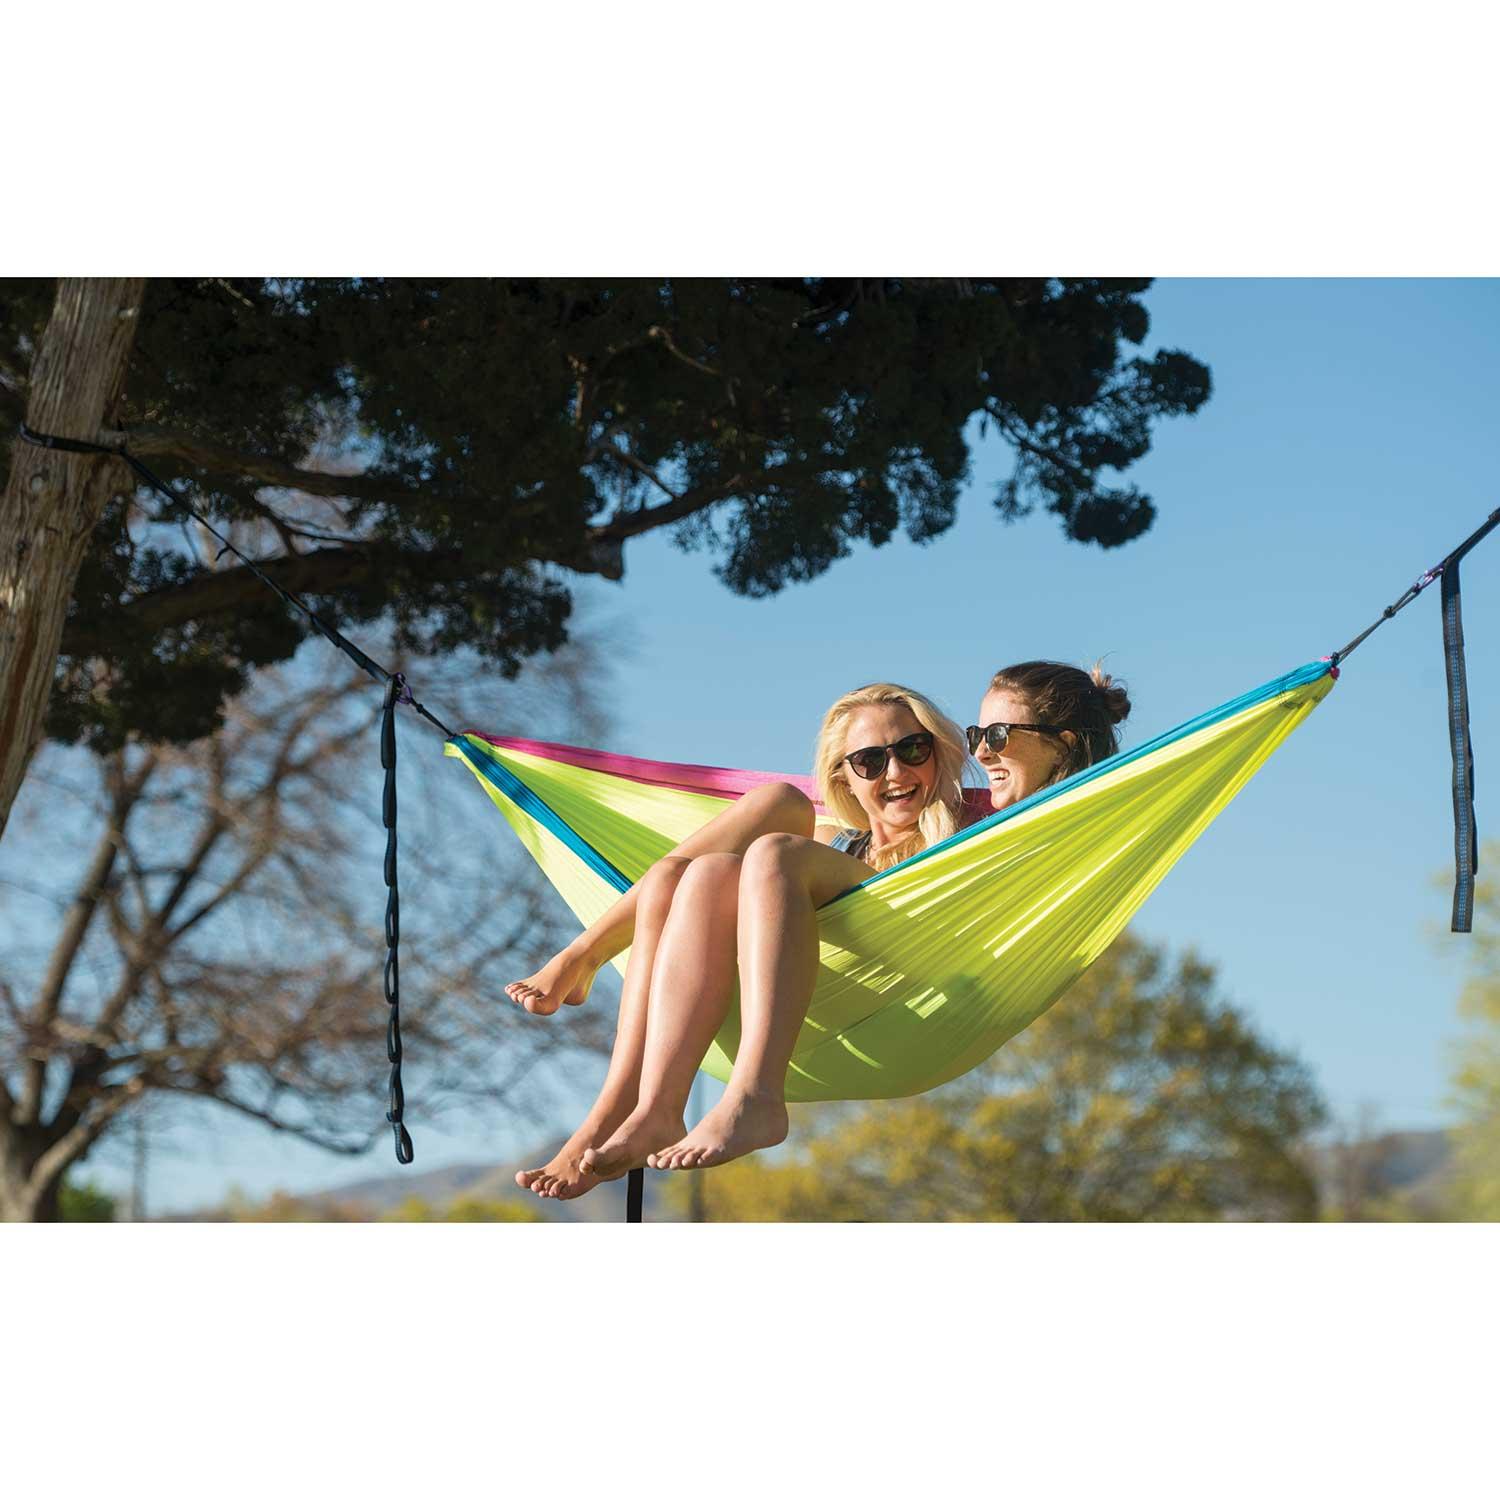 Single or double nest hammock